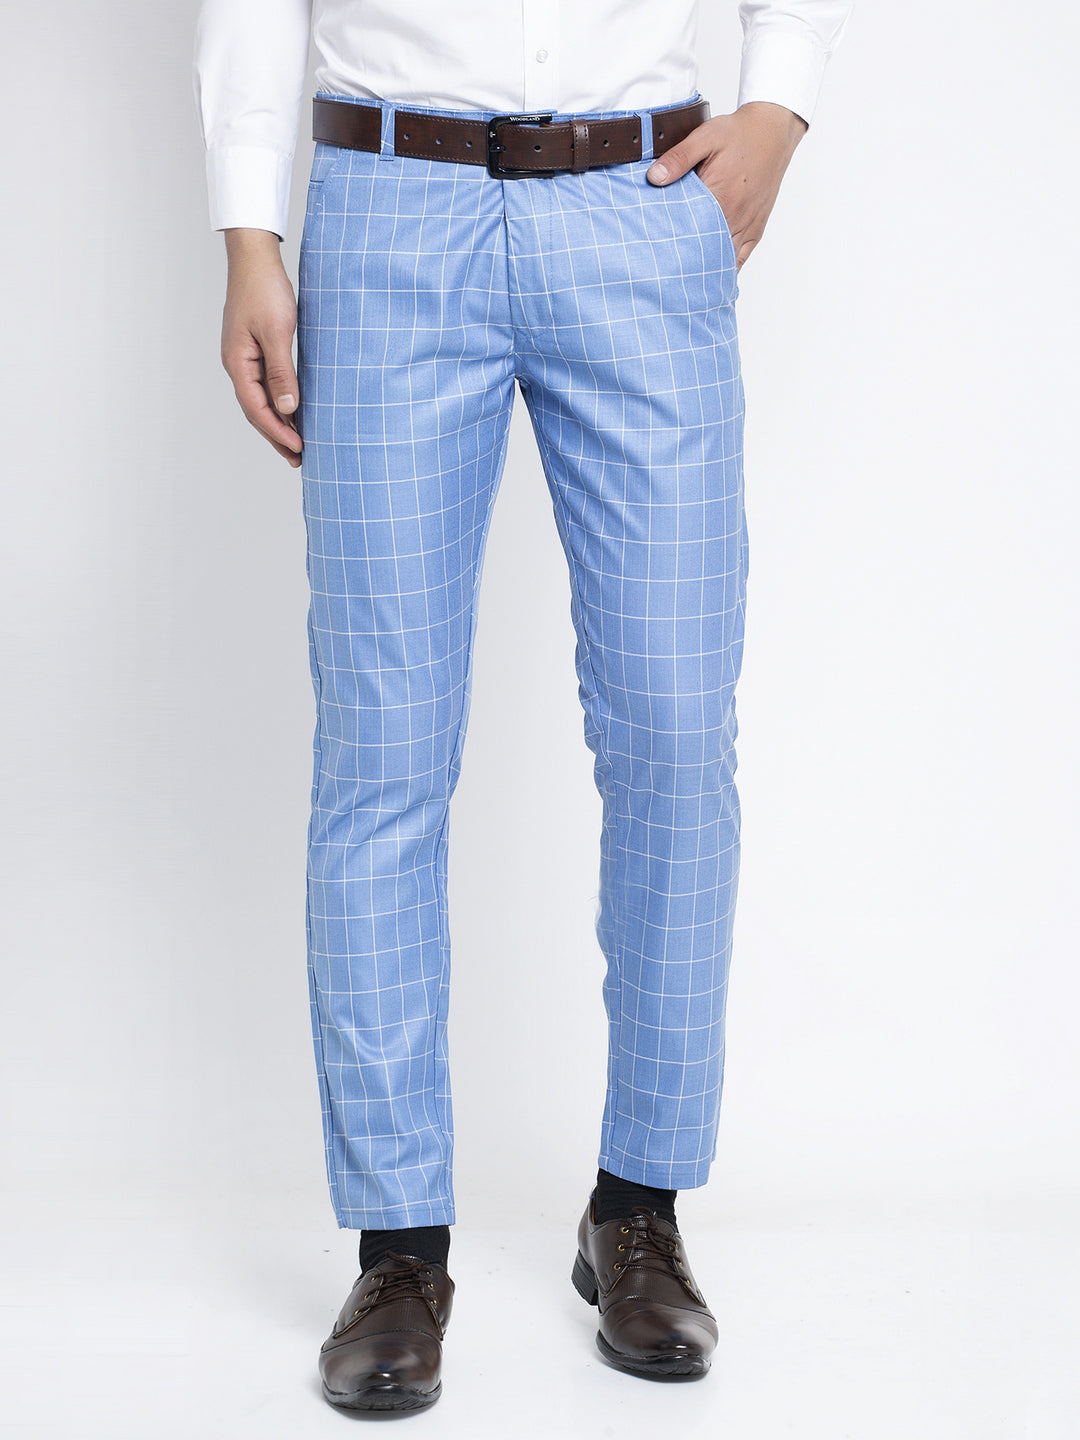 Sky Blue Regular Fit Formal Trouser Pant For Men For Daily Use, Office